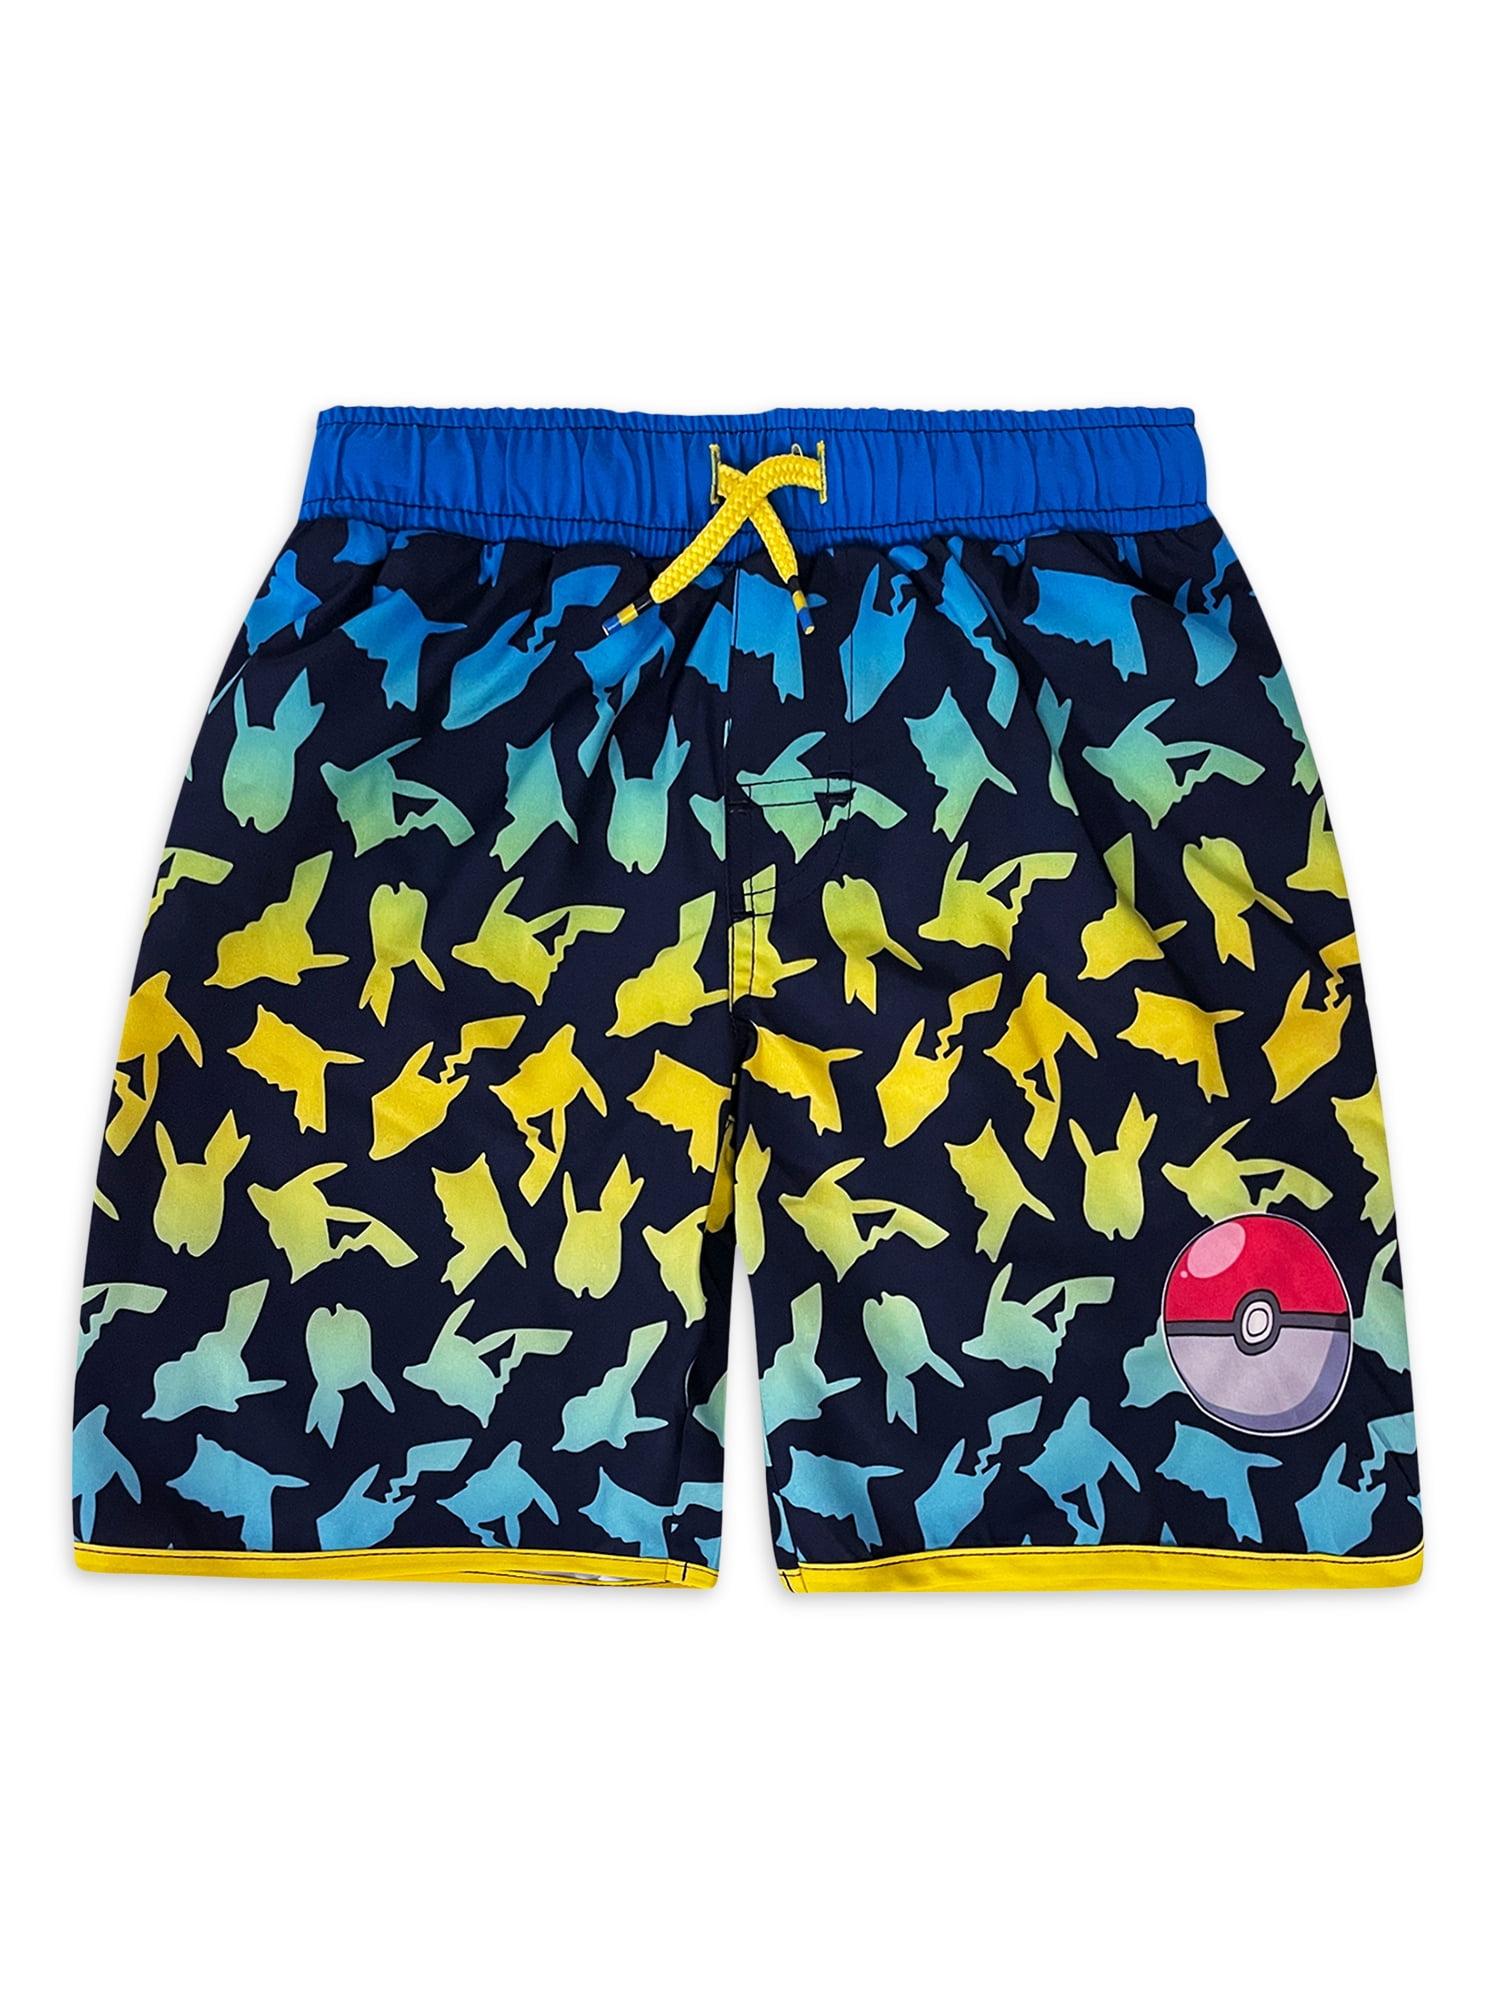 Summer Sale Banner Swim Suits Shorts Shirts Flip Flops Retail Store Sign 24x72 